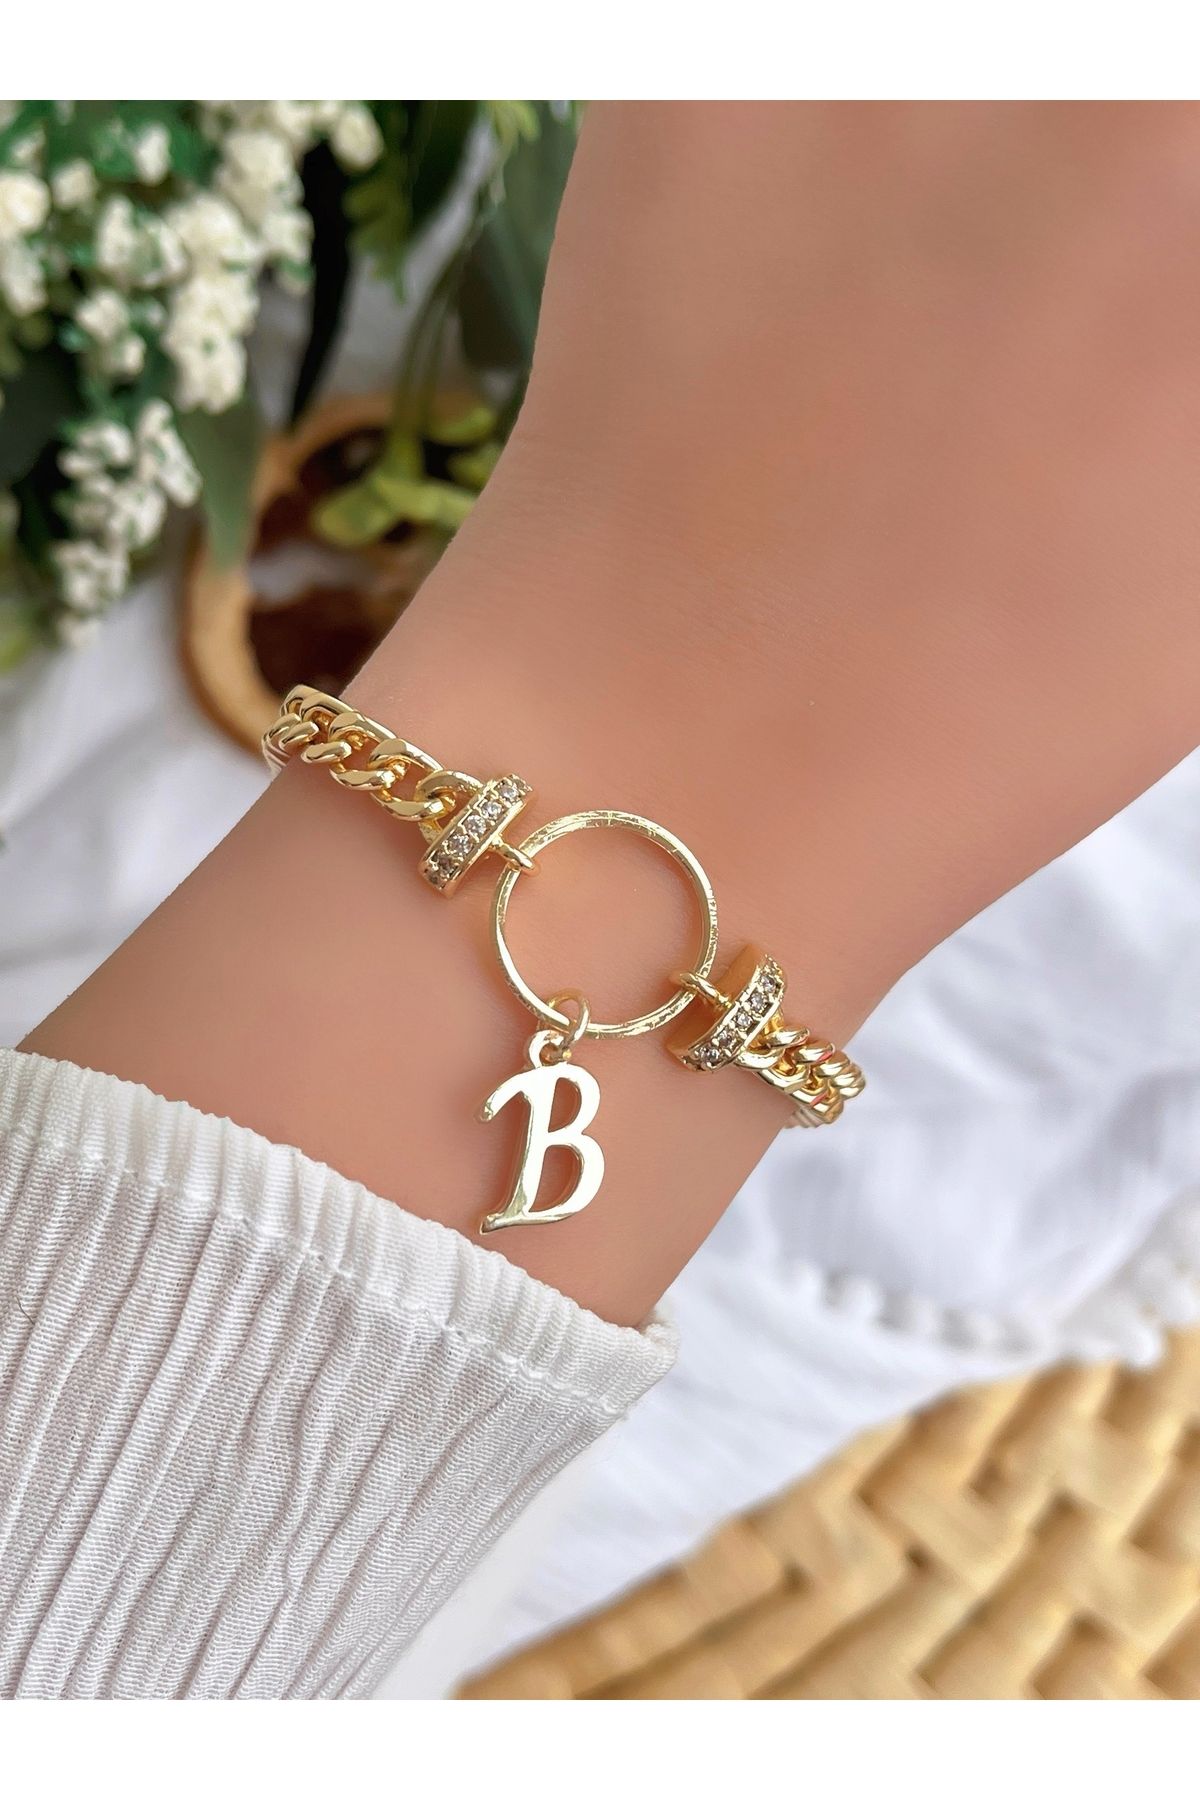 How to make name bracelet with only thread ( letter B ) | Friendship  bracelet | DIY bracelet - YouTube